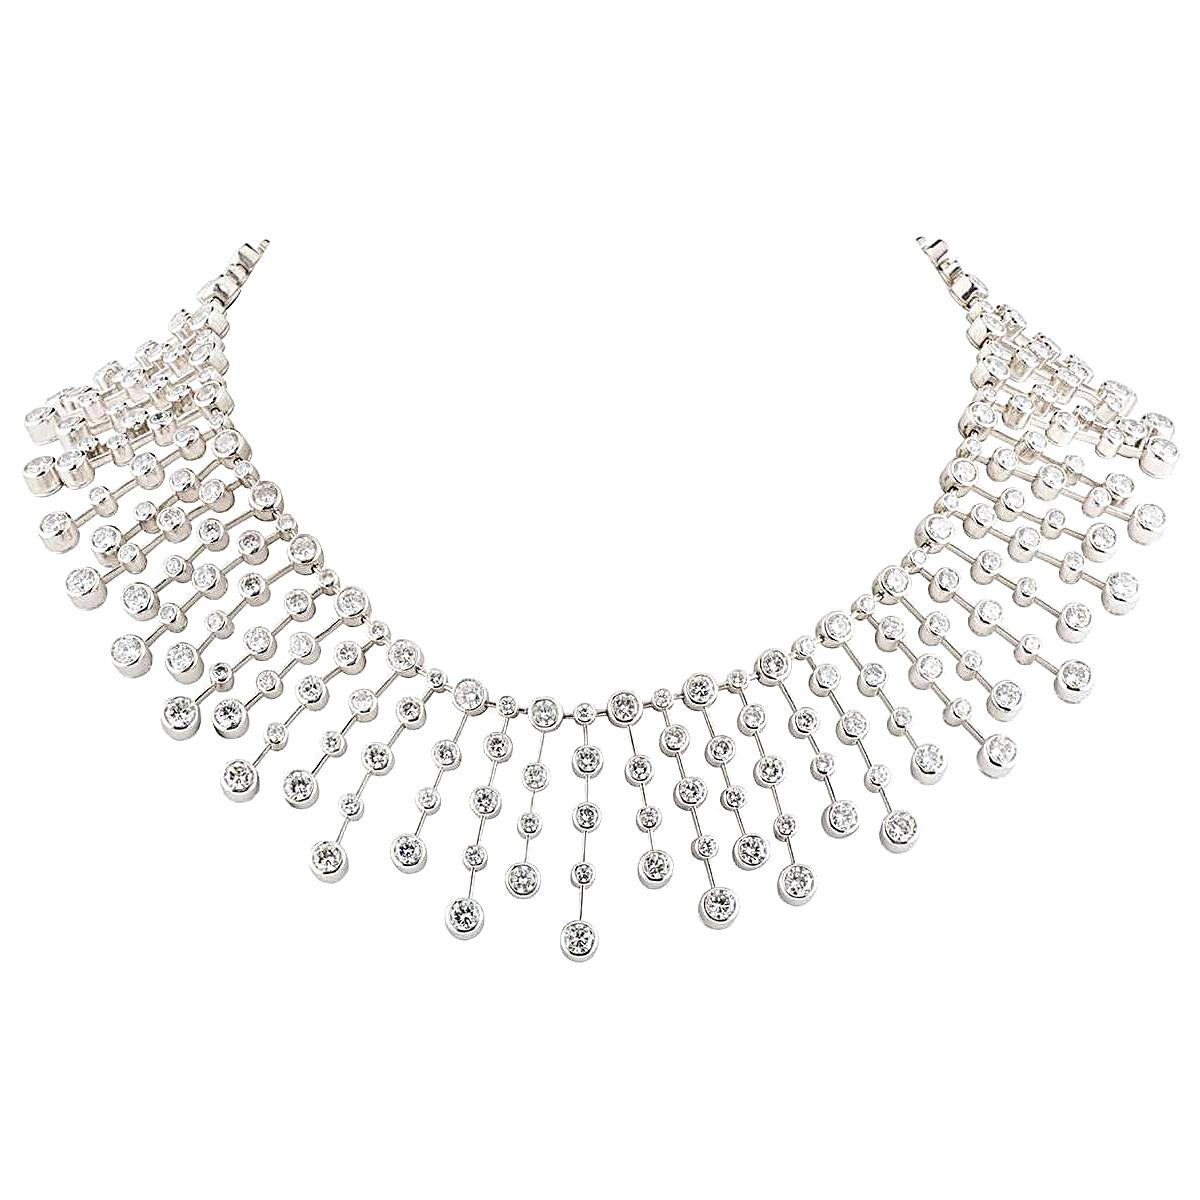 Cartier 60.00 Carat Diamond Platinum Necklace